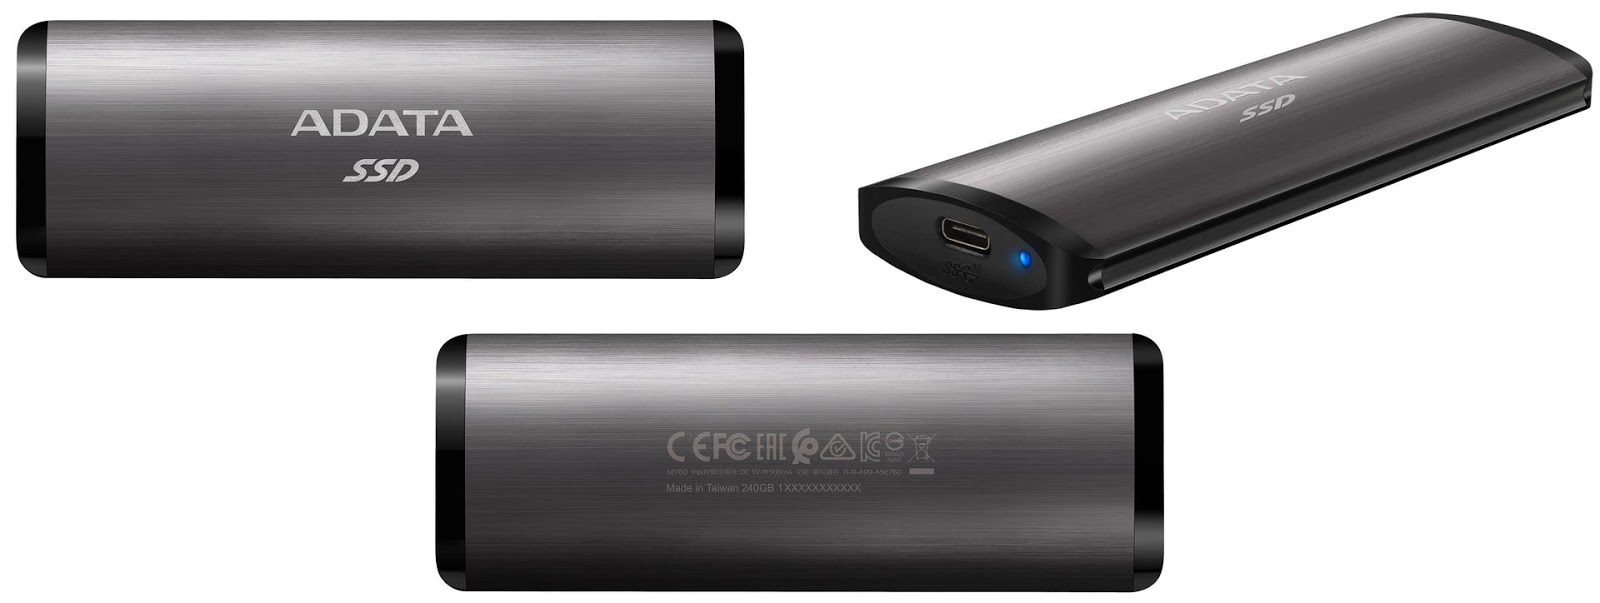 SE760 USB 3.2 Gen 2 εξωτερικό SSD με ταχύτητες μέχρι 1000 MB/s - Φωτογραφία 1